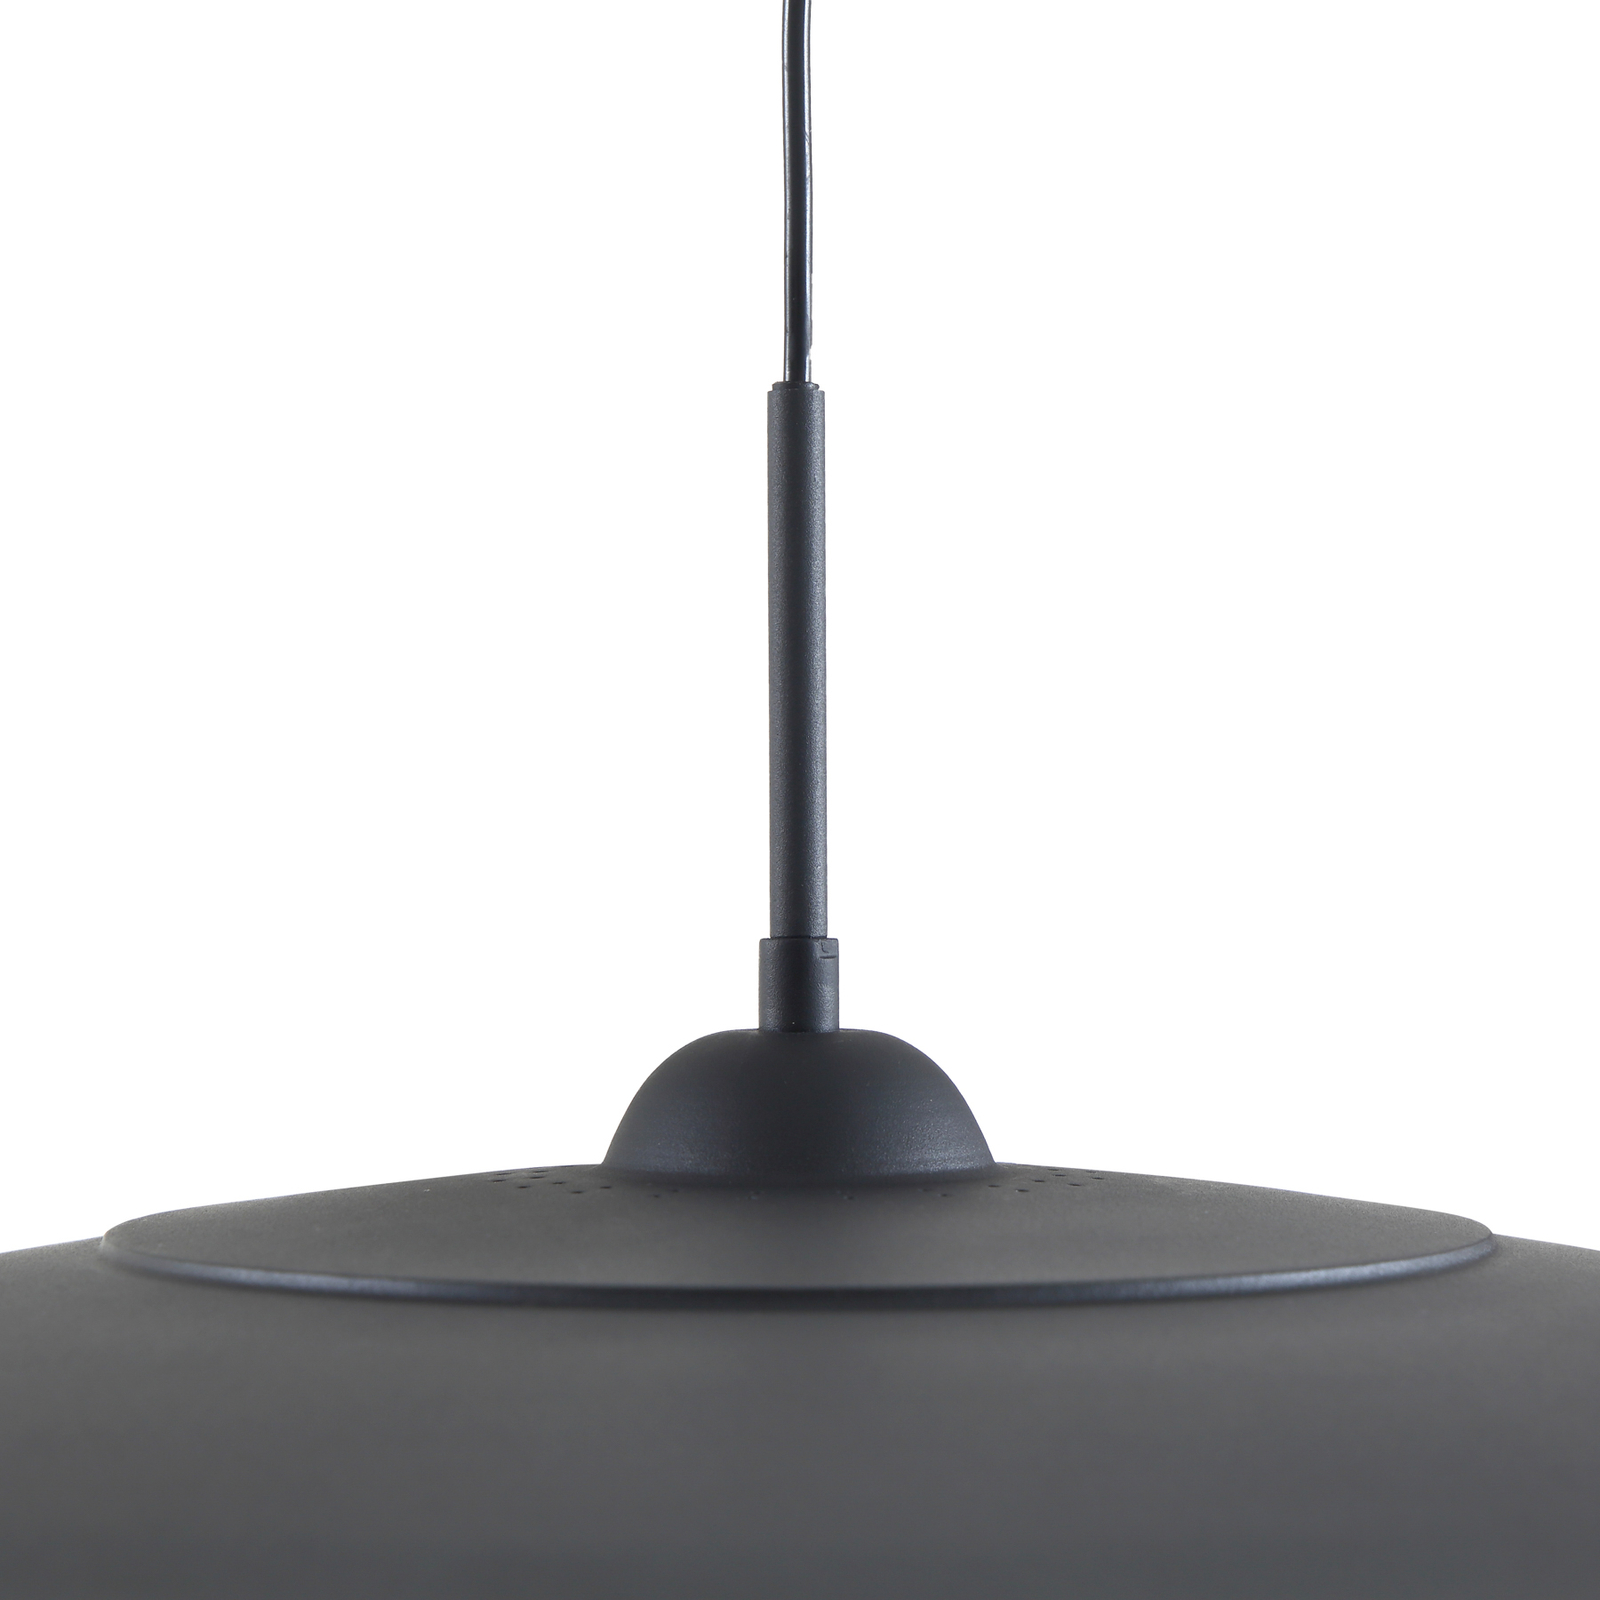 Lucande LED pendant light Foco, sand black, metal, Ø 50 cm 